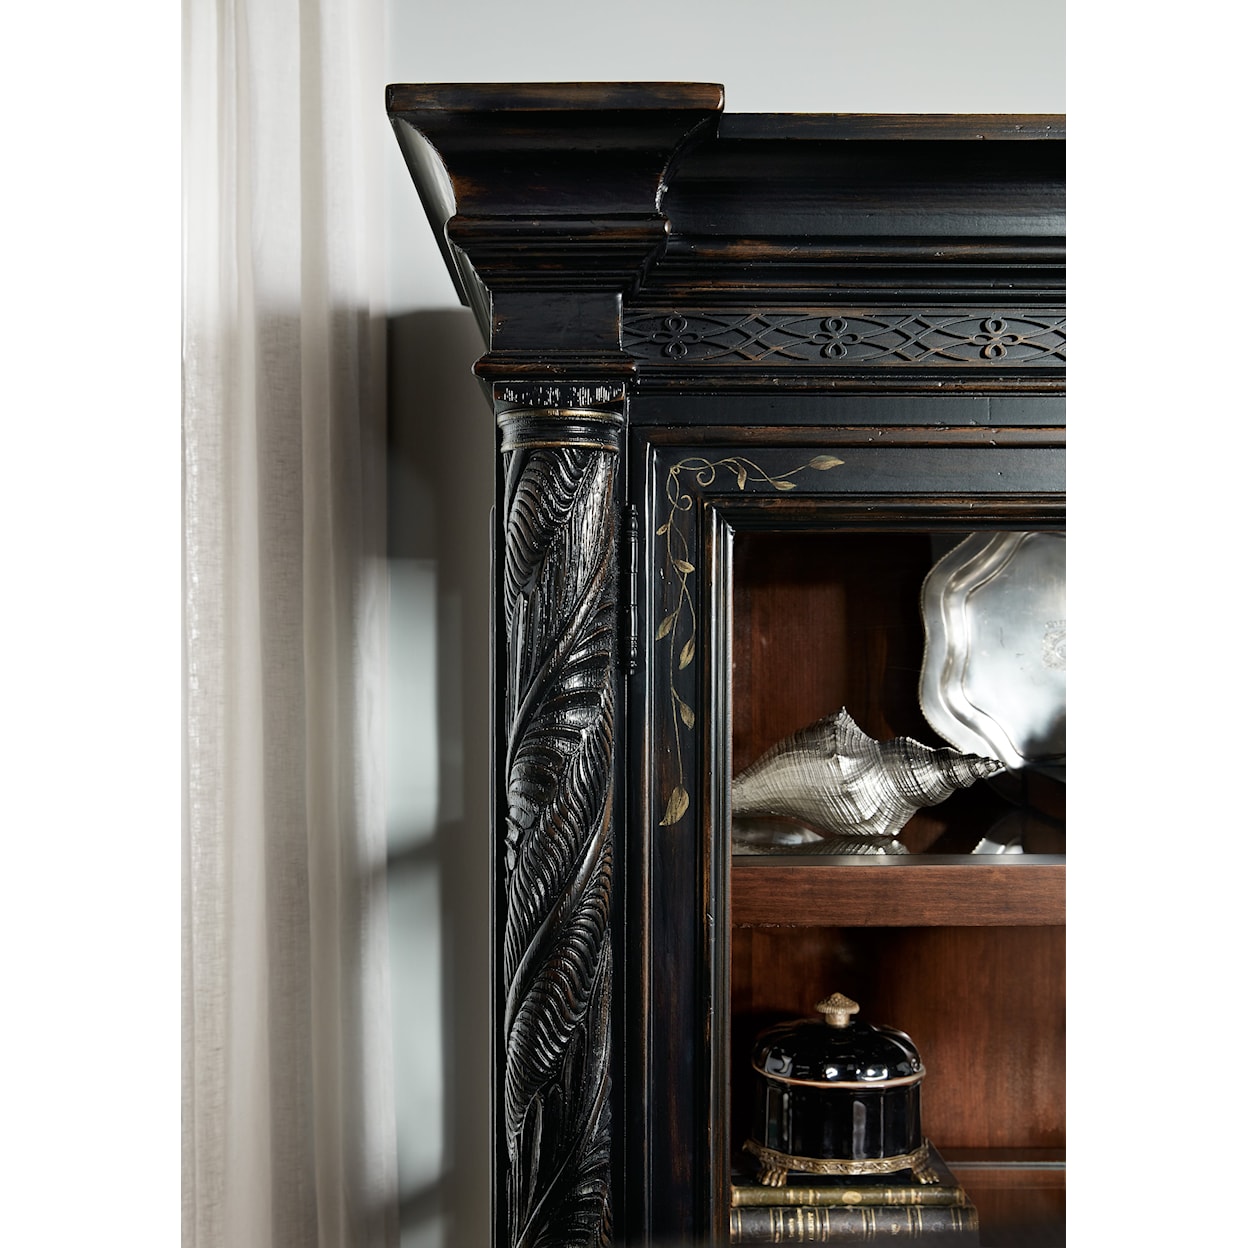 Hooker Furniture Charleston Display Cabinet